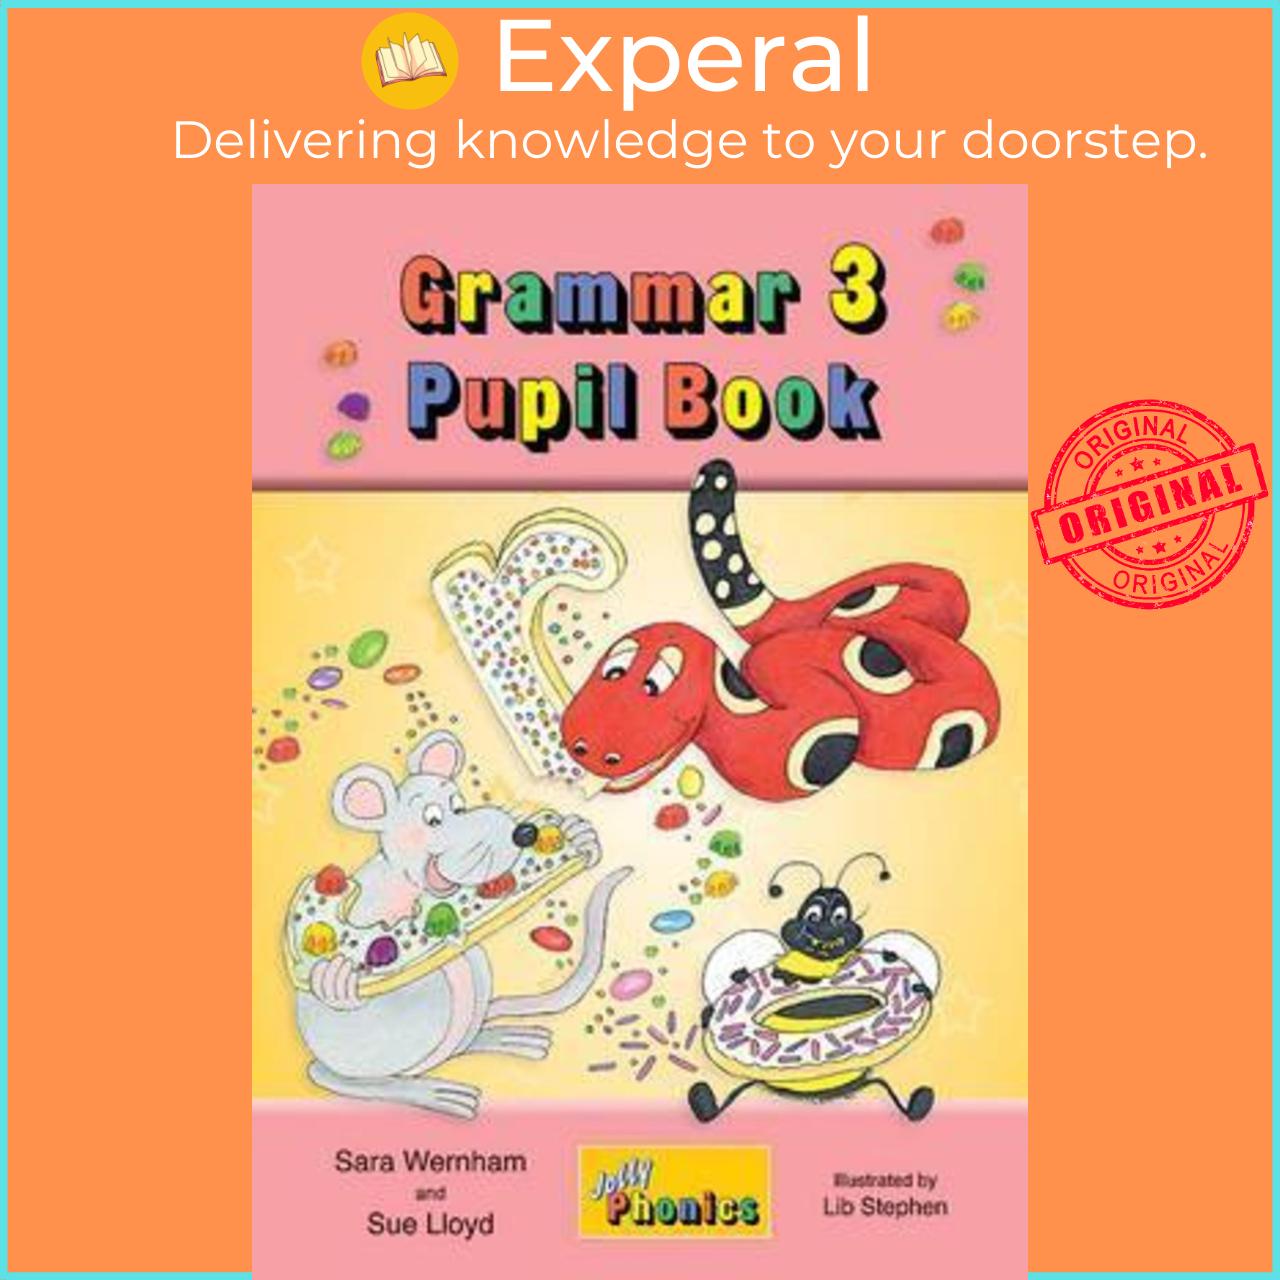 Sách - Grammar 3 Pupil Book : In Precursive Letters (British English edition) by Sara Wernham (UK edition, paperback)